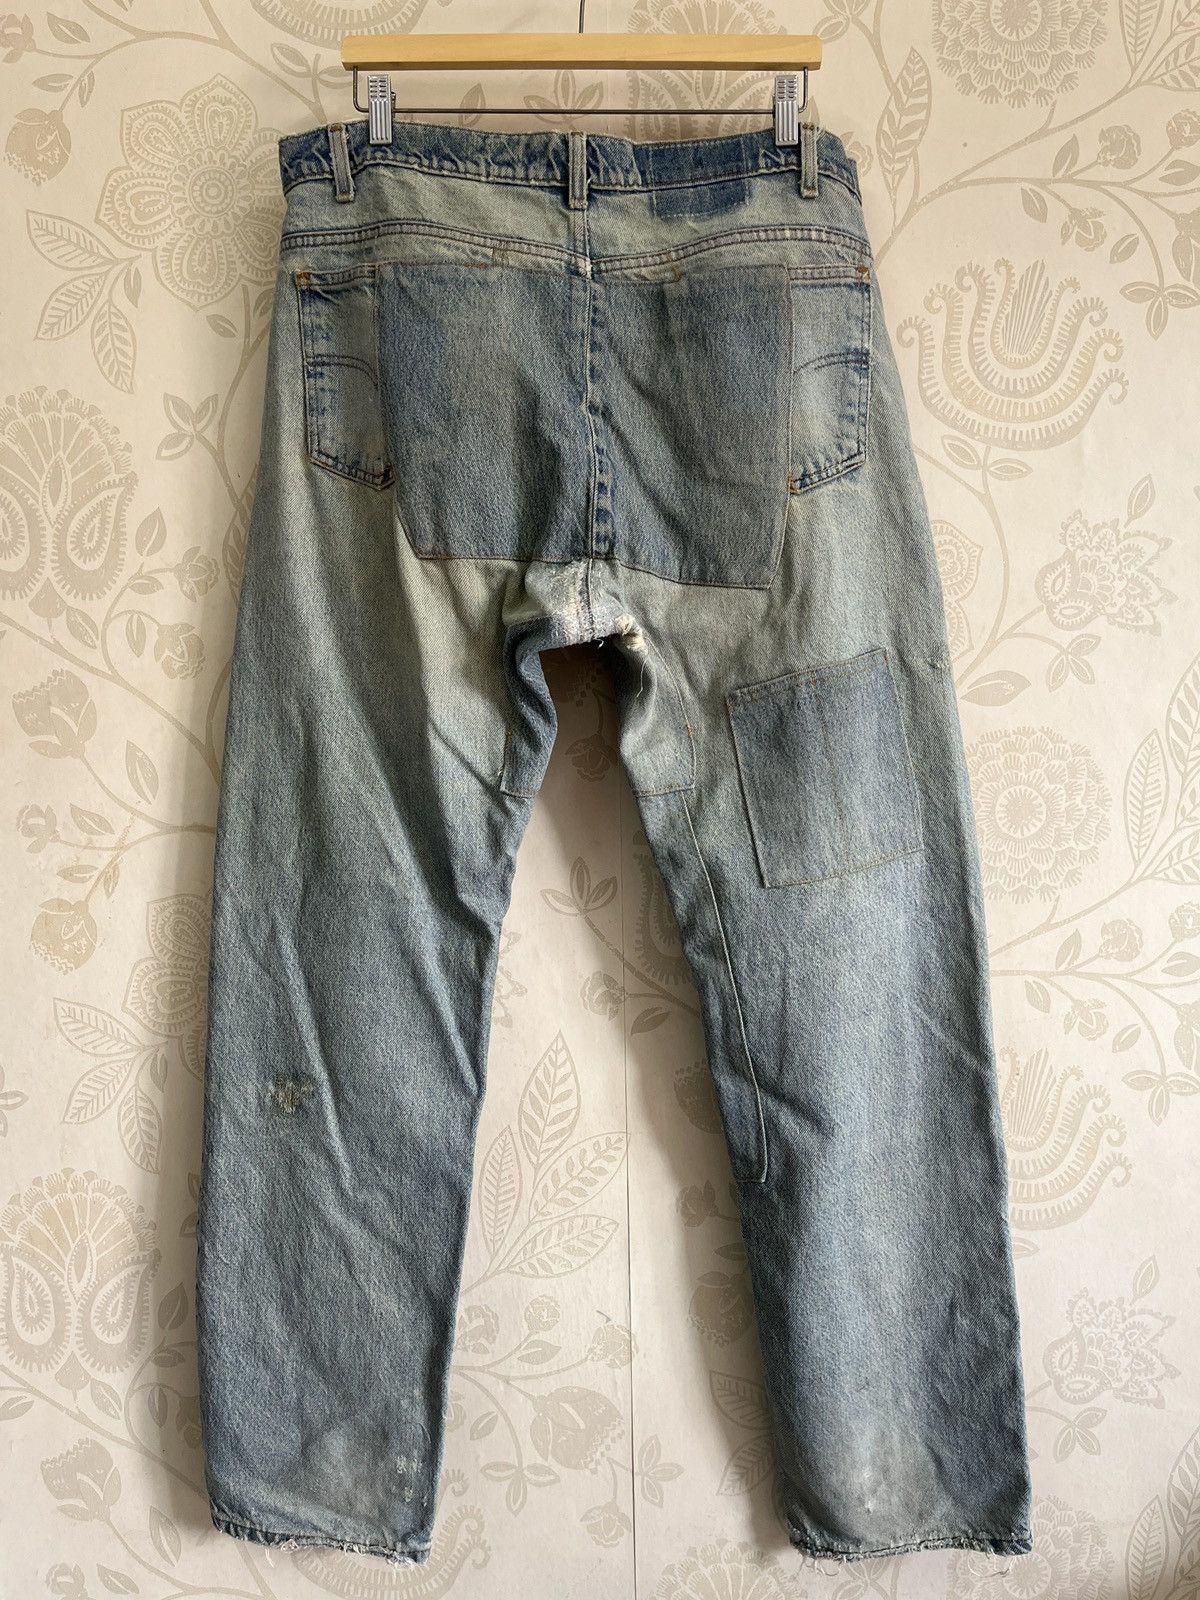 Grails Vintage Custom Matsuda Kapital Patches Japanese Jeans - 2